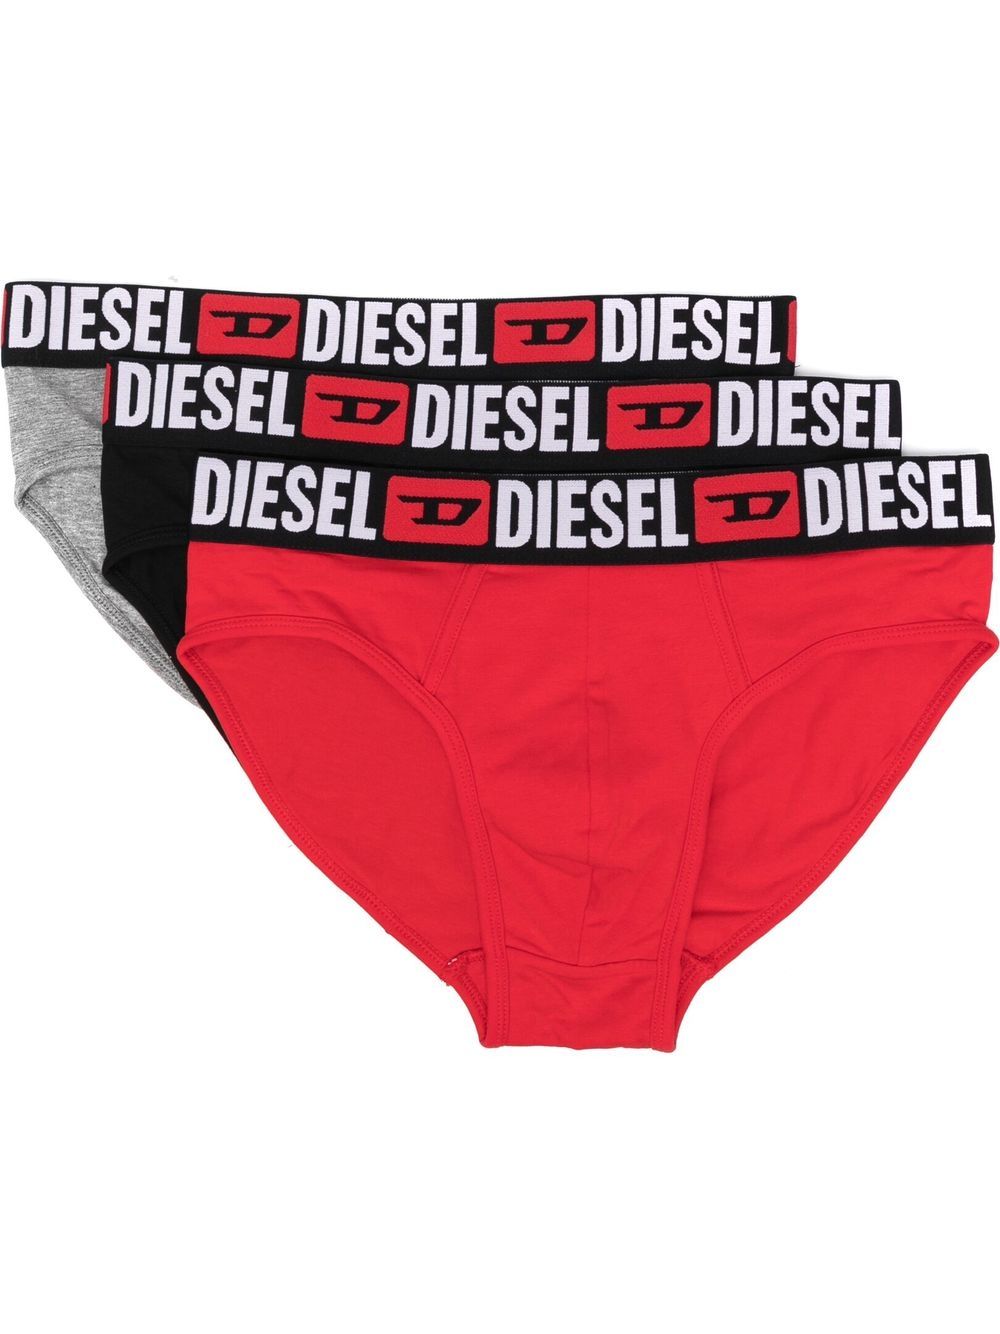 Image 1 of Diesel Umbr-Andre briefs (pack of three)